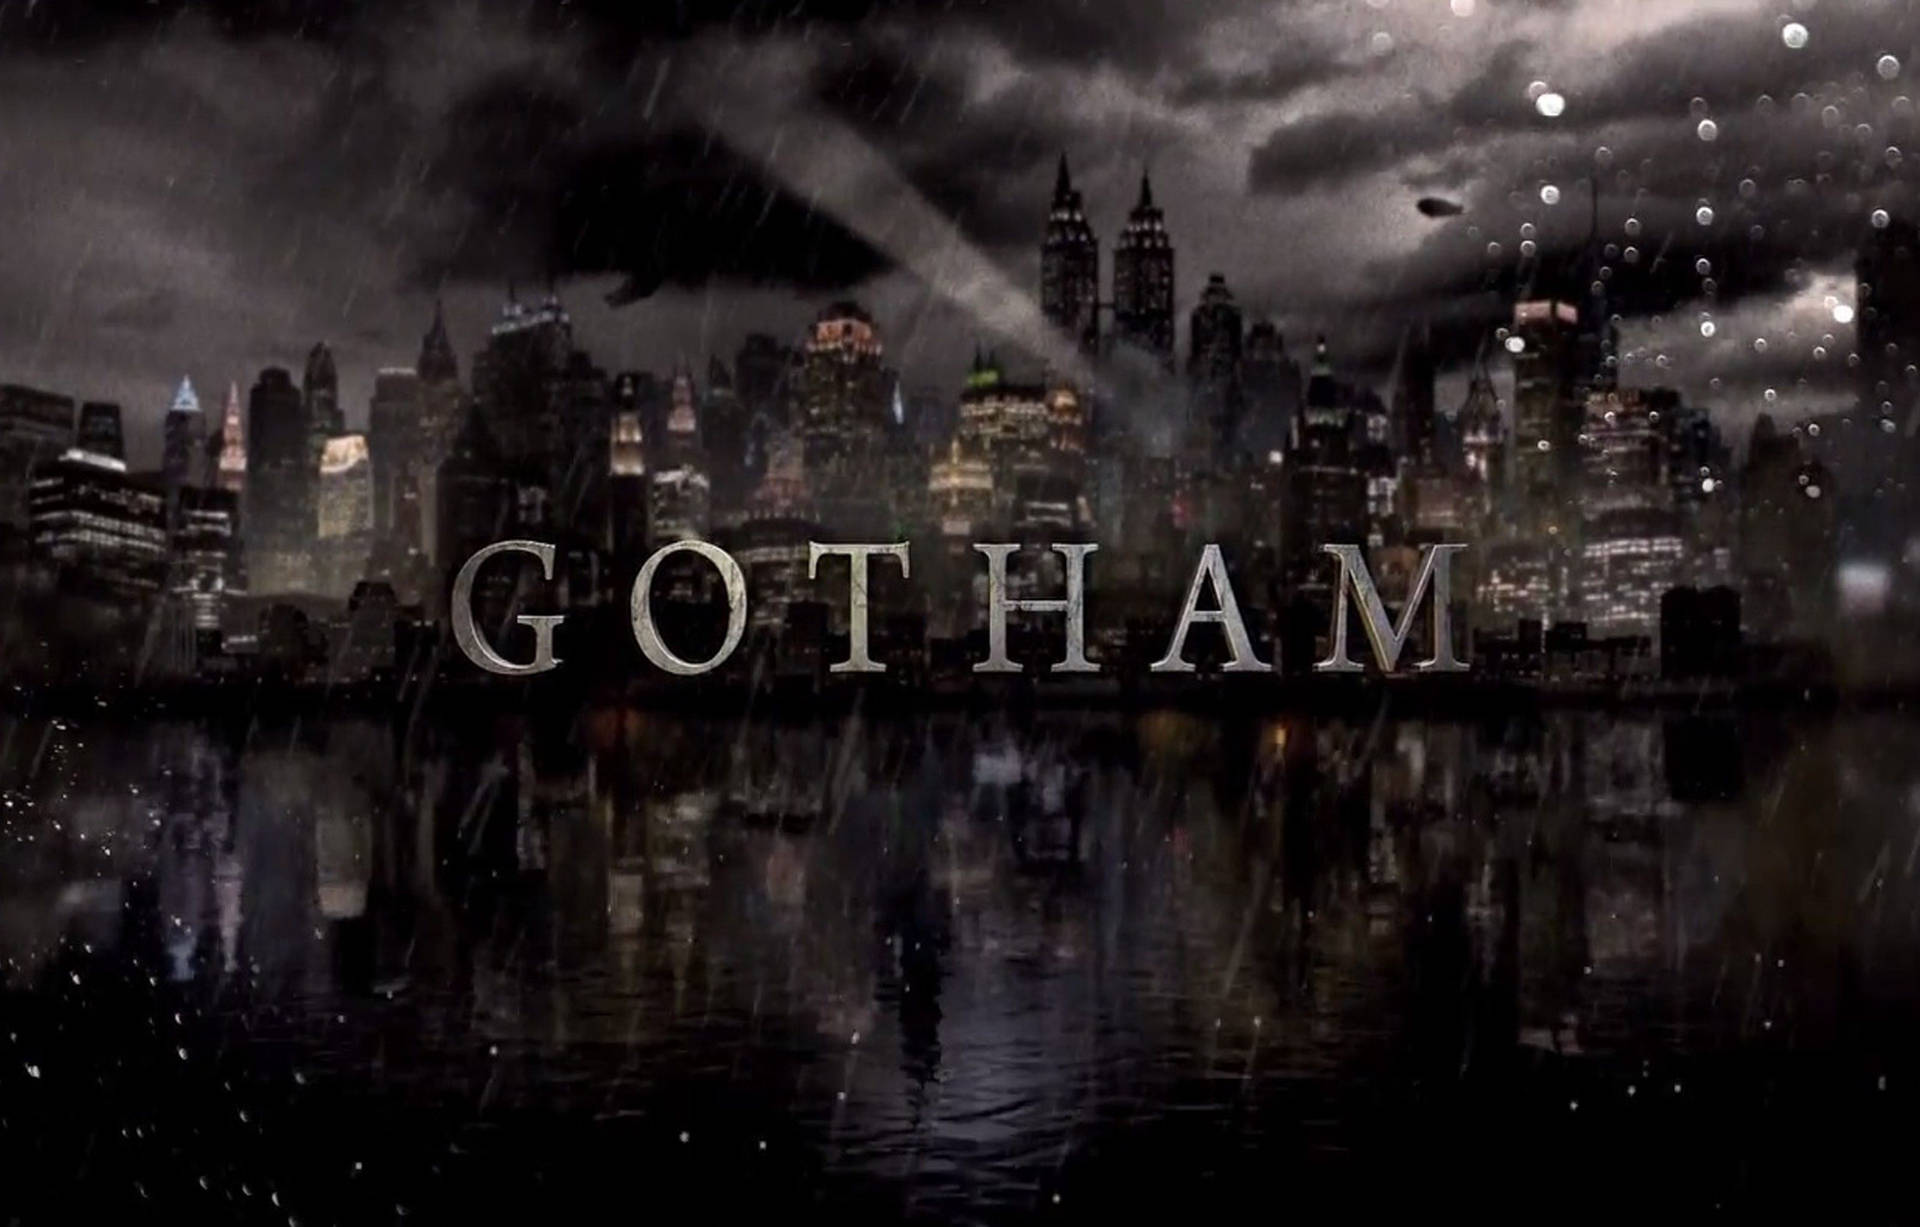 Gotham The American Crime Series Wallpaper